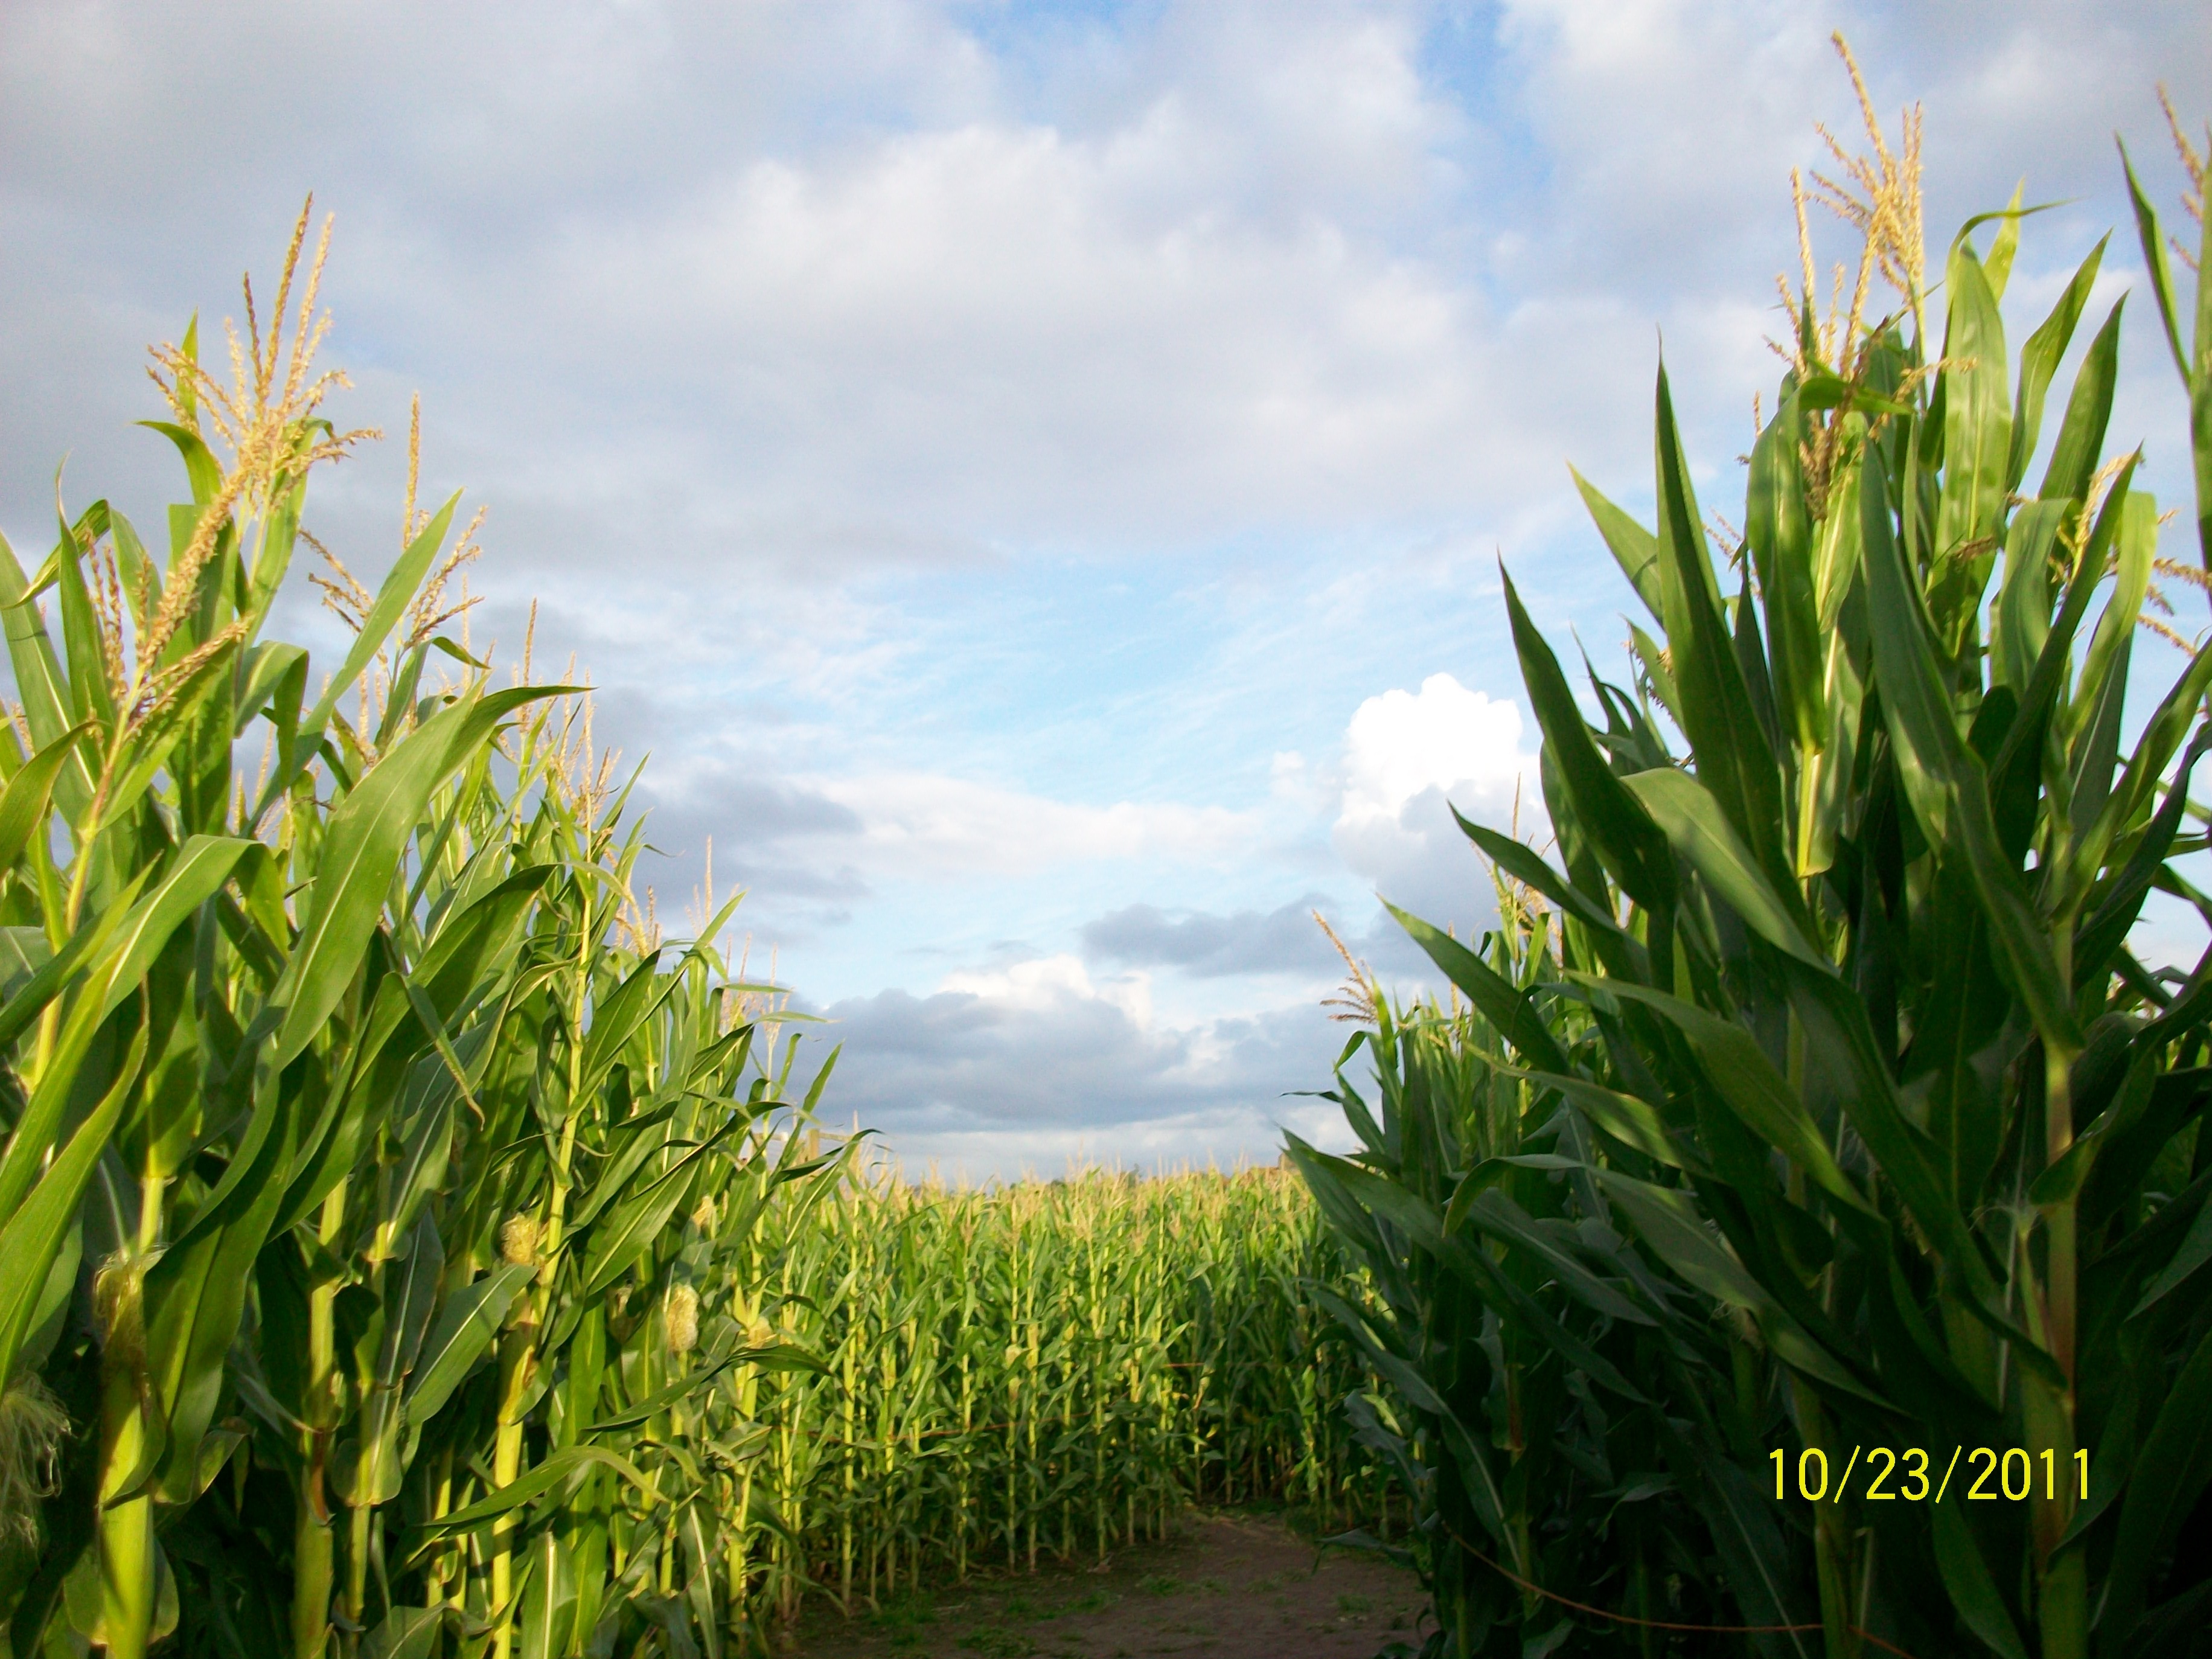 8 ft. corn row and cloudy blue sky